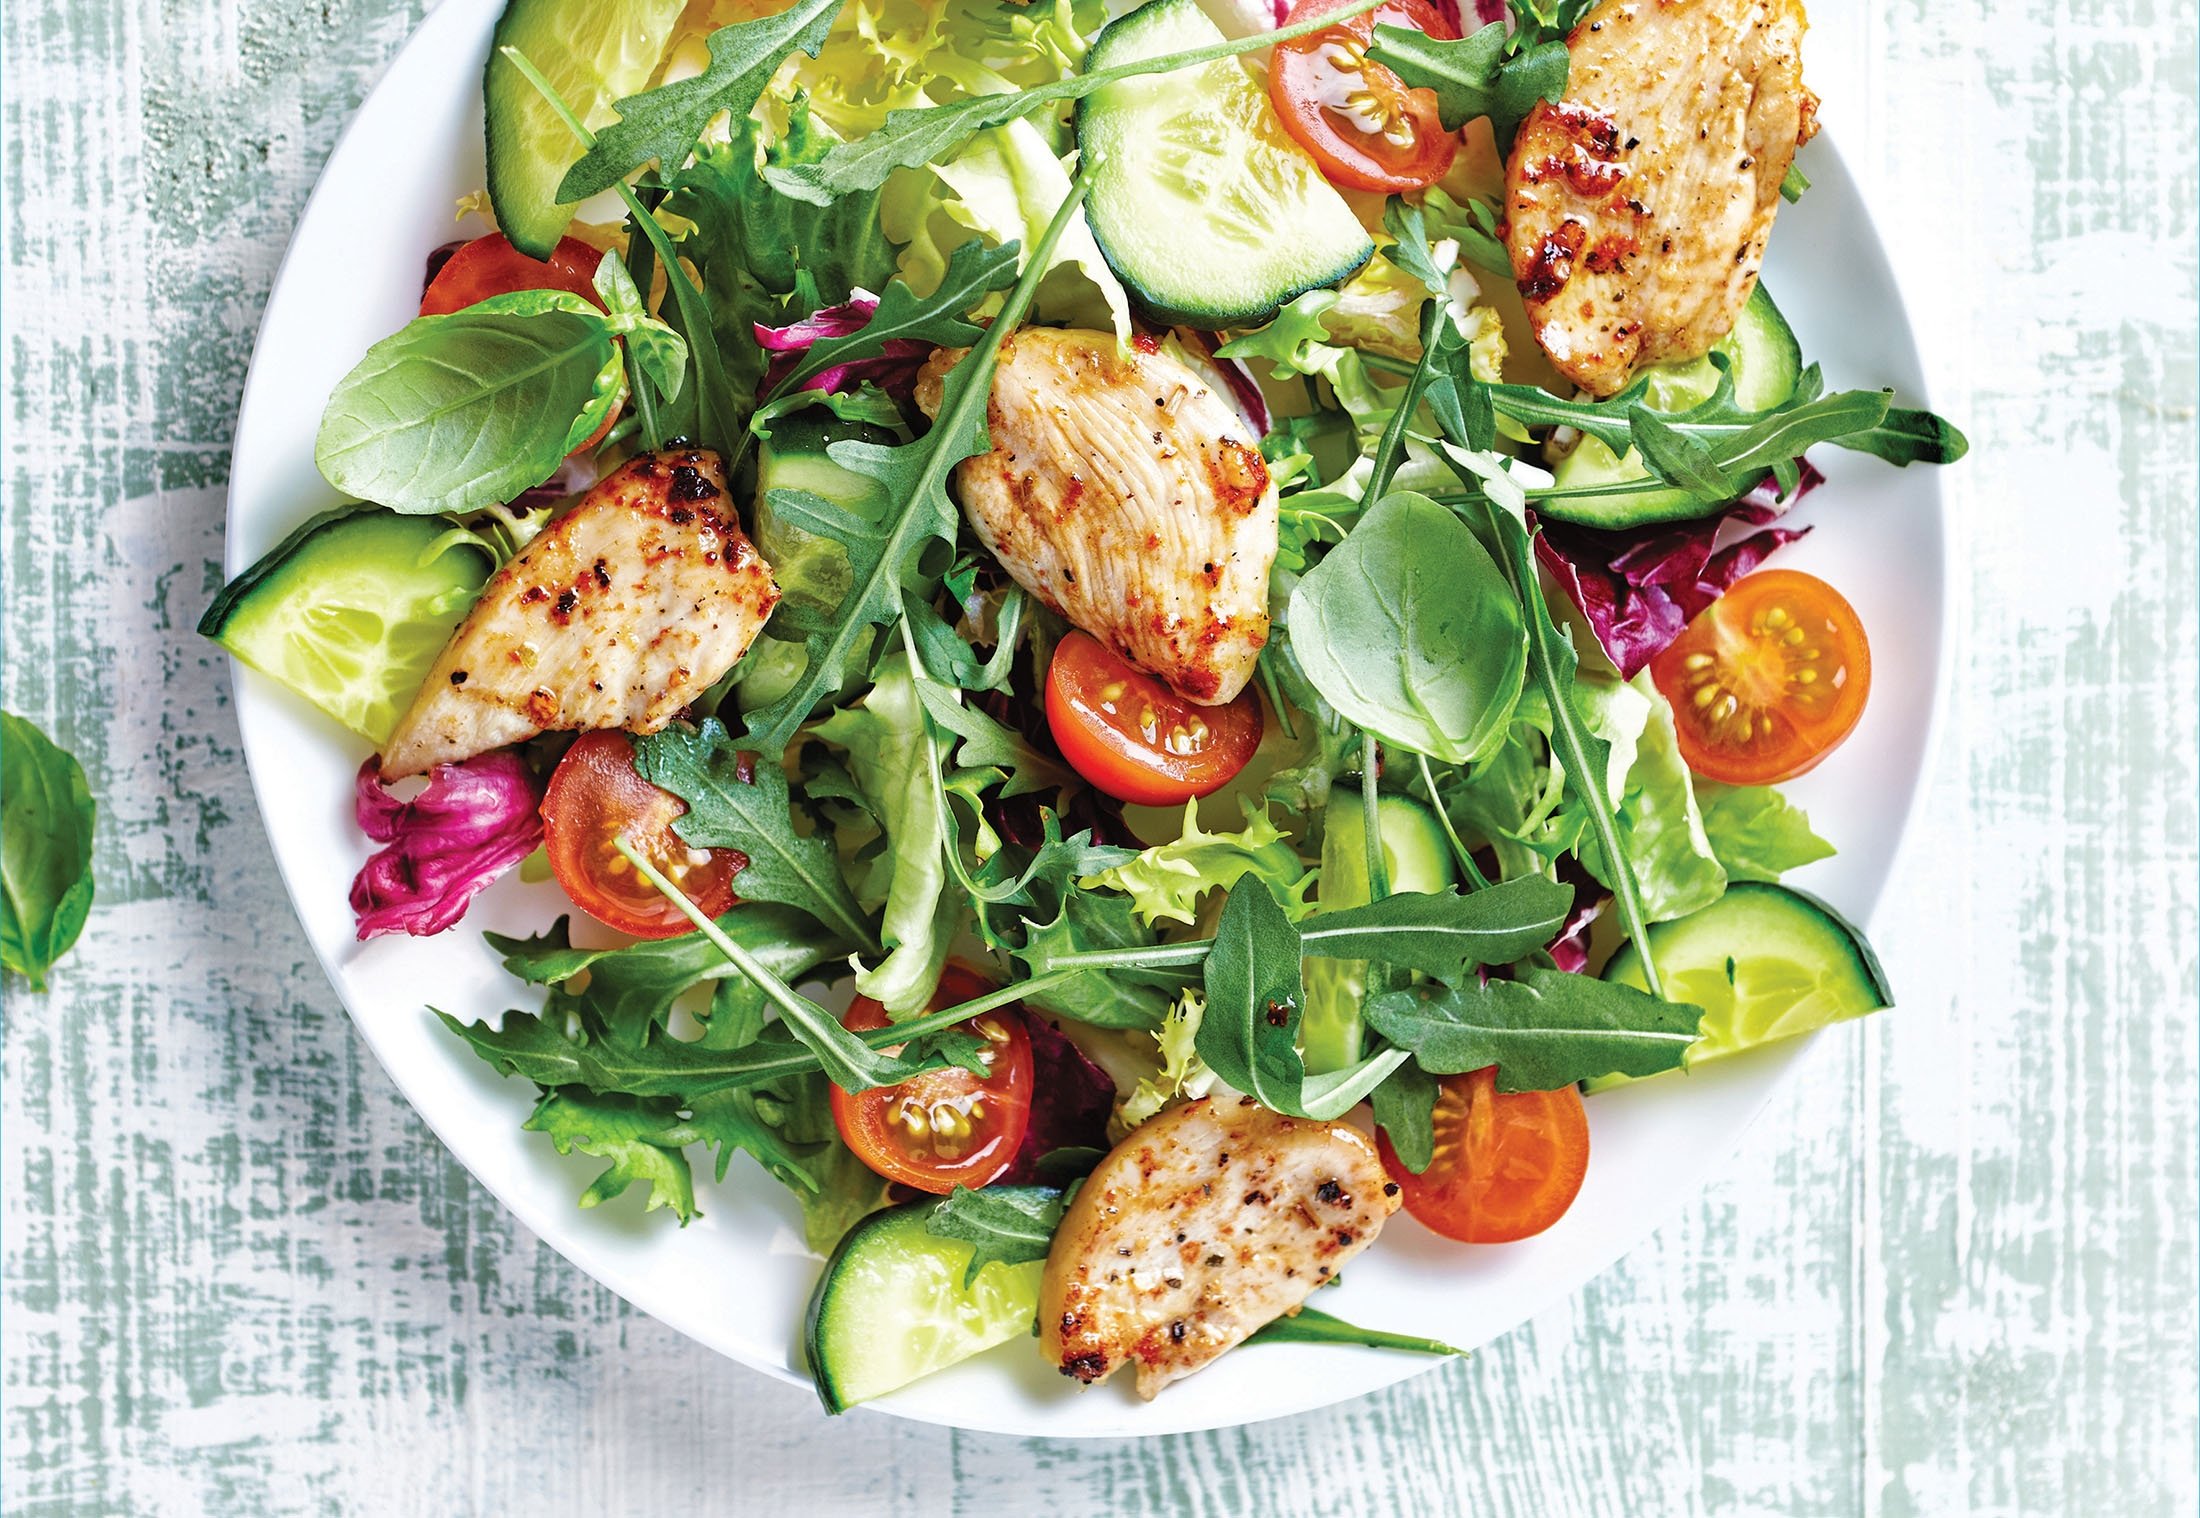 Green salad with chicken. (Shutterstock Photo)